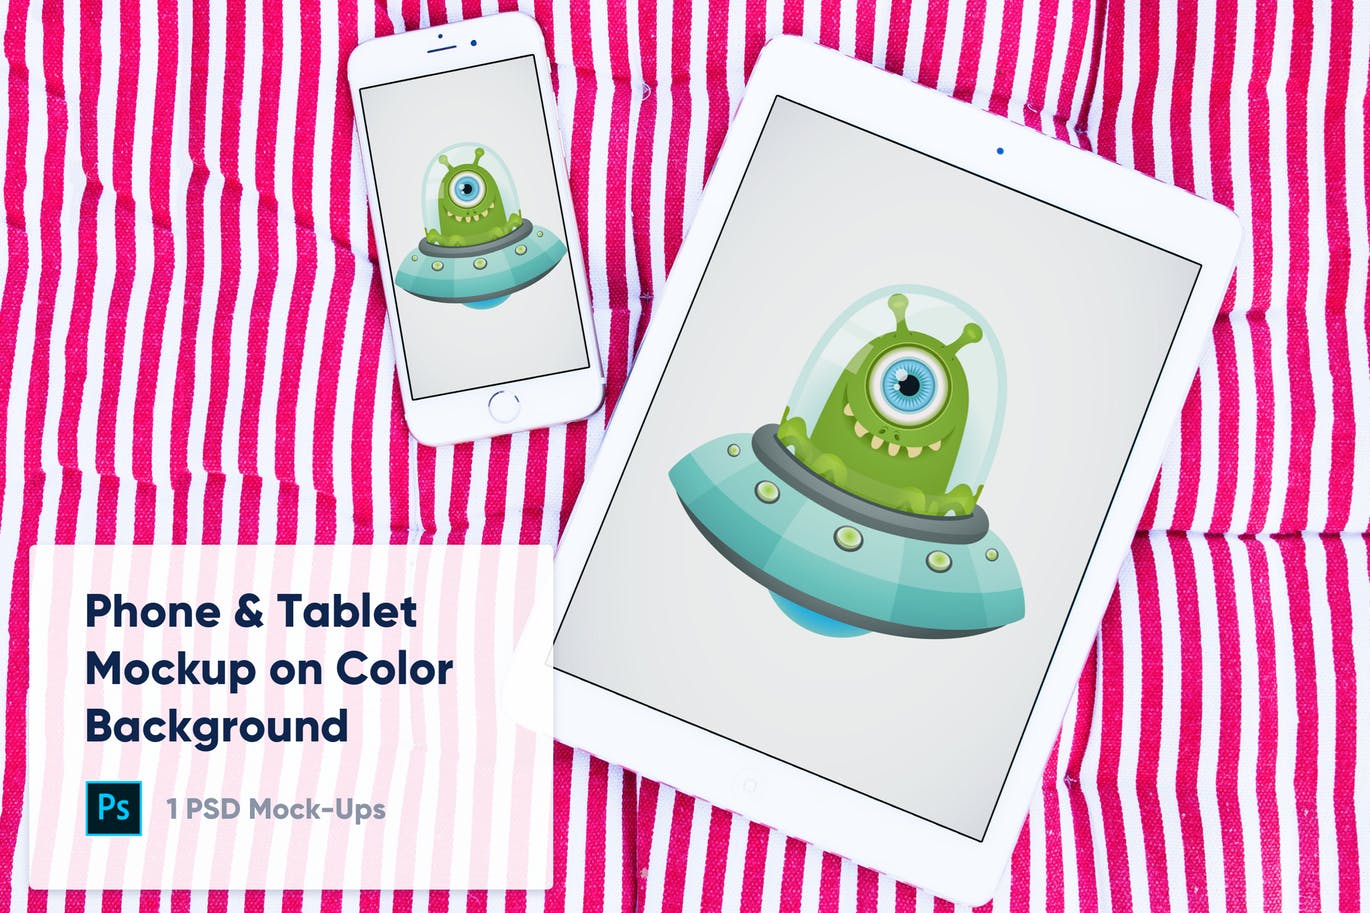 彩色背景平板电脑&手机大洋岛精选样机模板 1 Tablet & Phone Mockup on Color Background插图